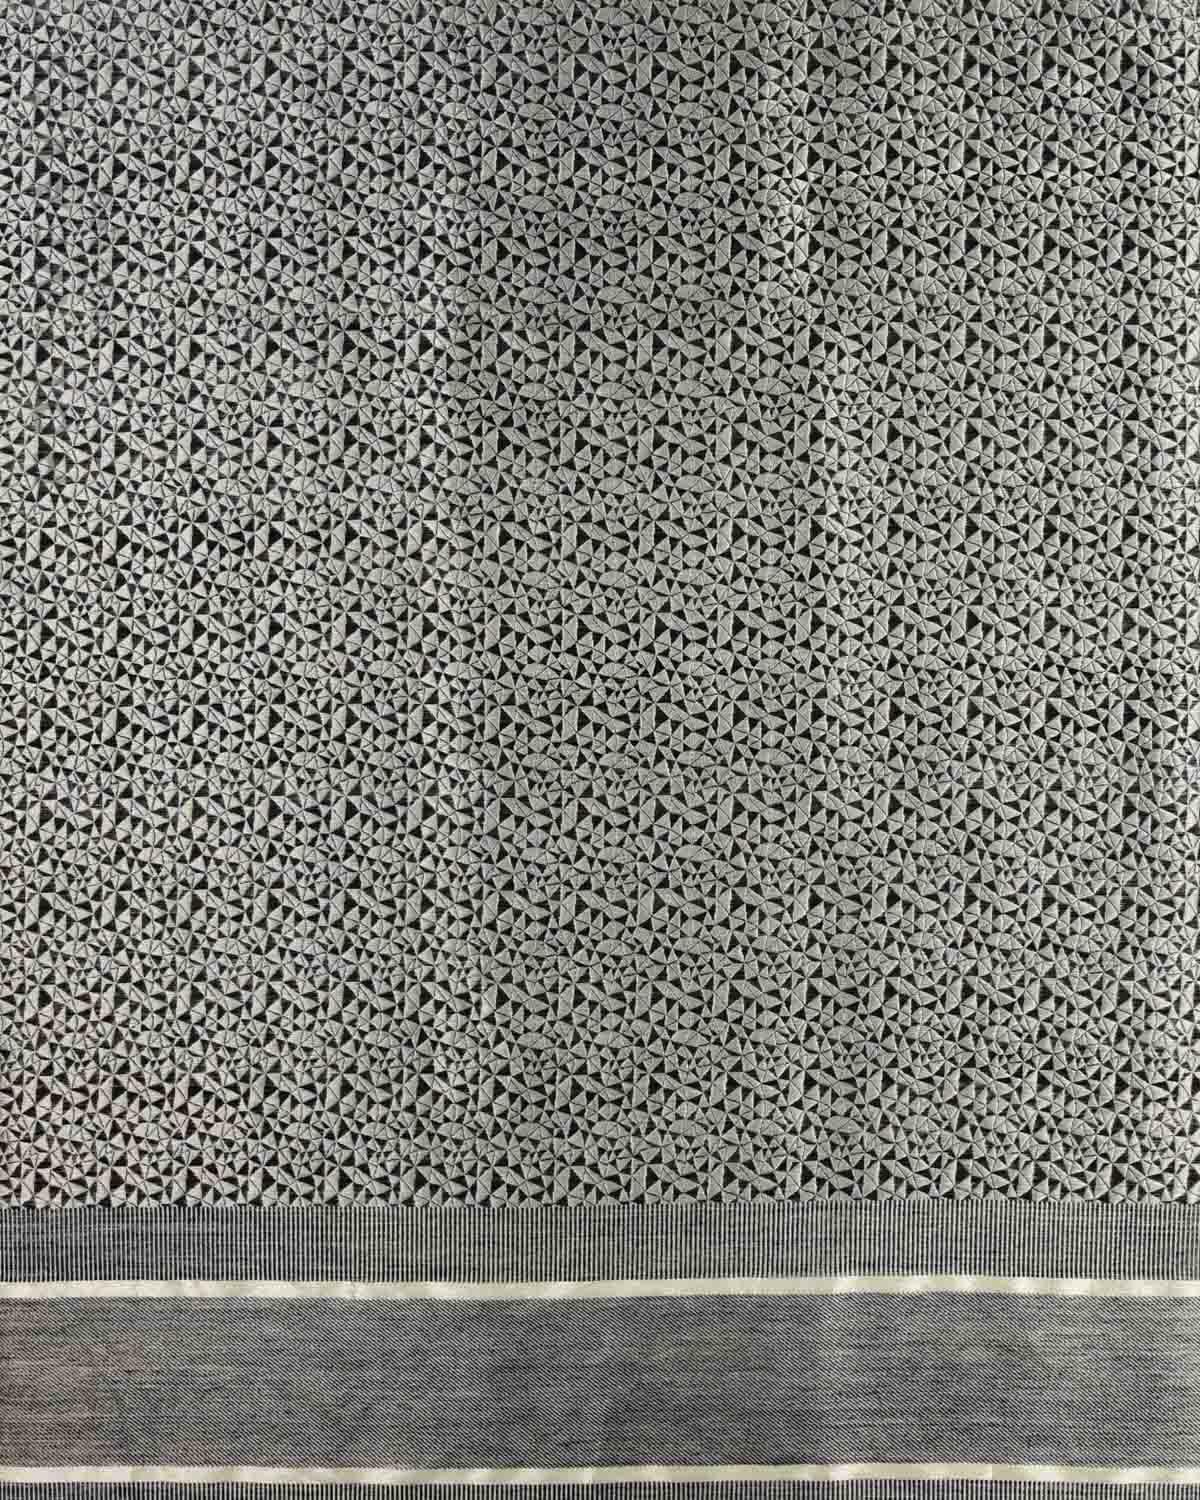 Black & Silver Banarasi Silver Zari Geometrical Jaal Brocade Handwoven Silk-Wool Dupatta Shawl - By HolyWeaves, Benares